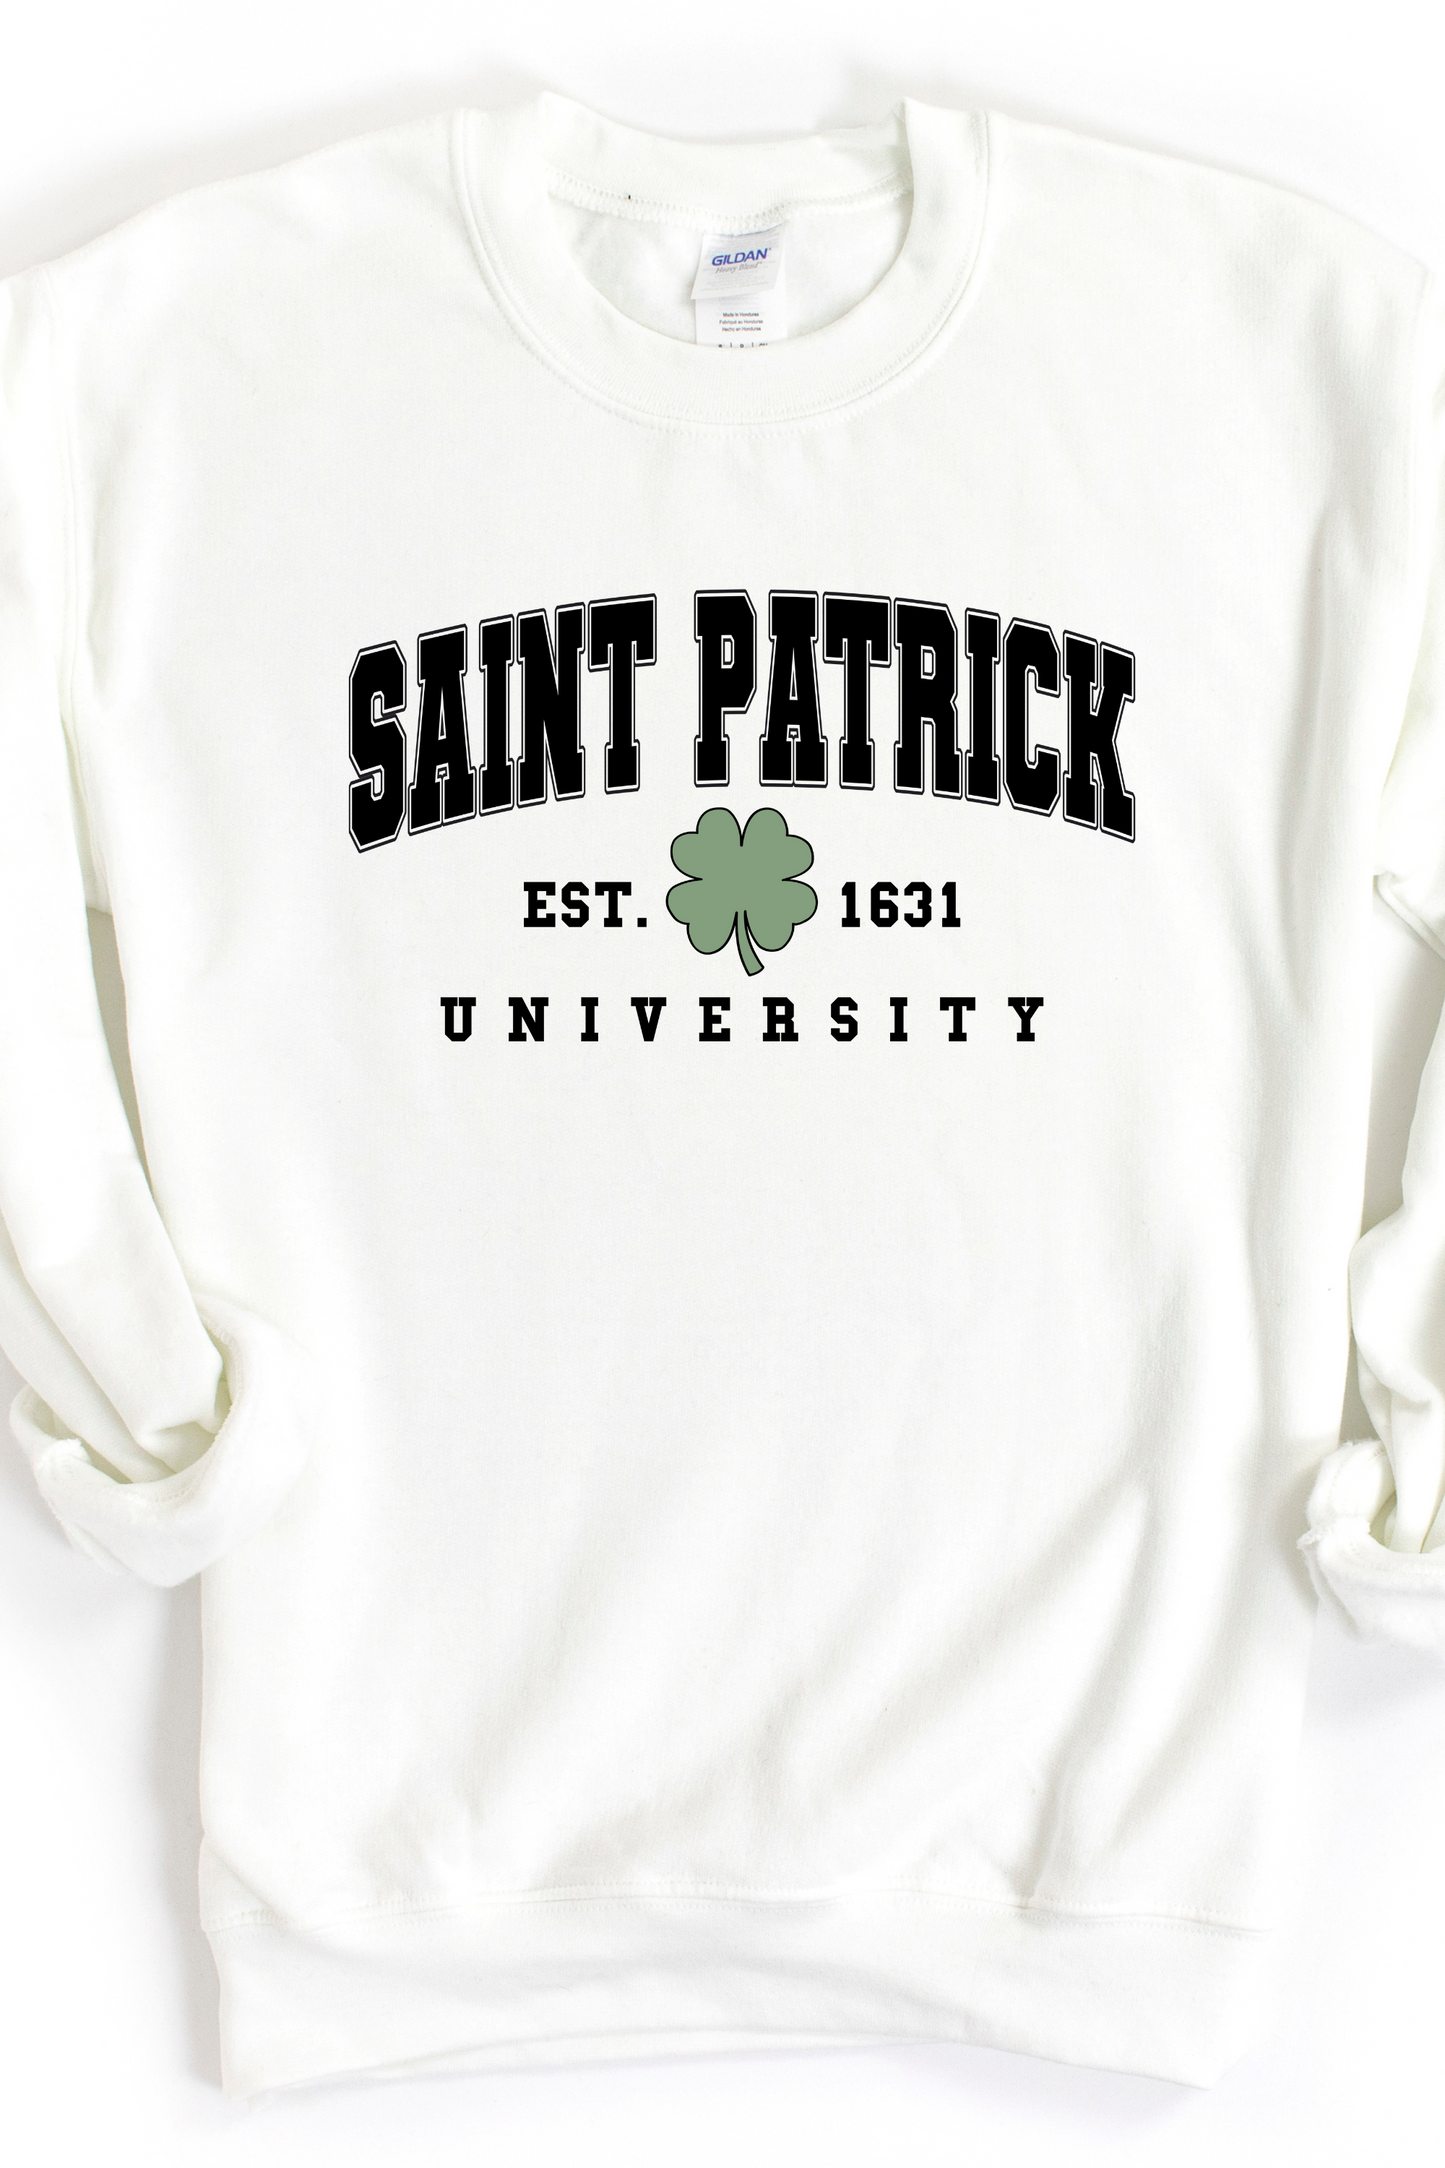 ST. PATRICK UNIVERSITY SWEATSHIRT